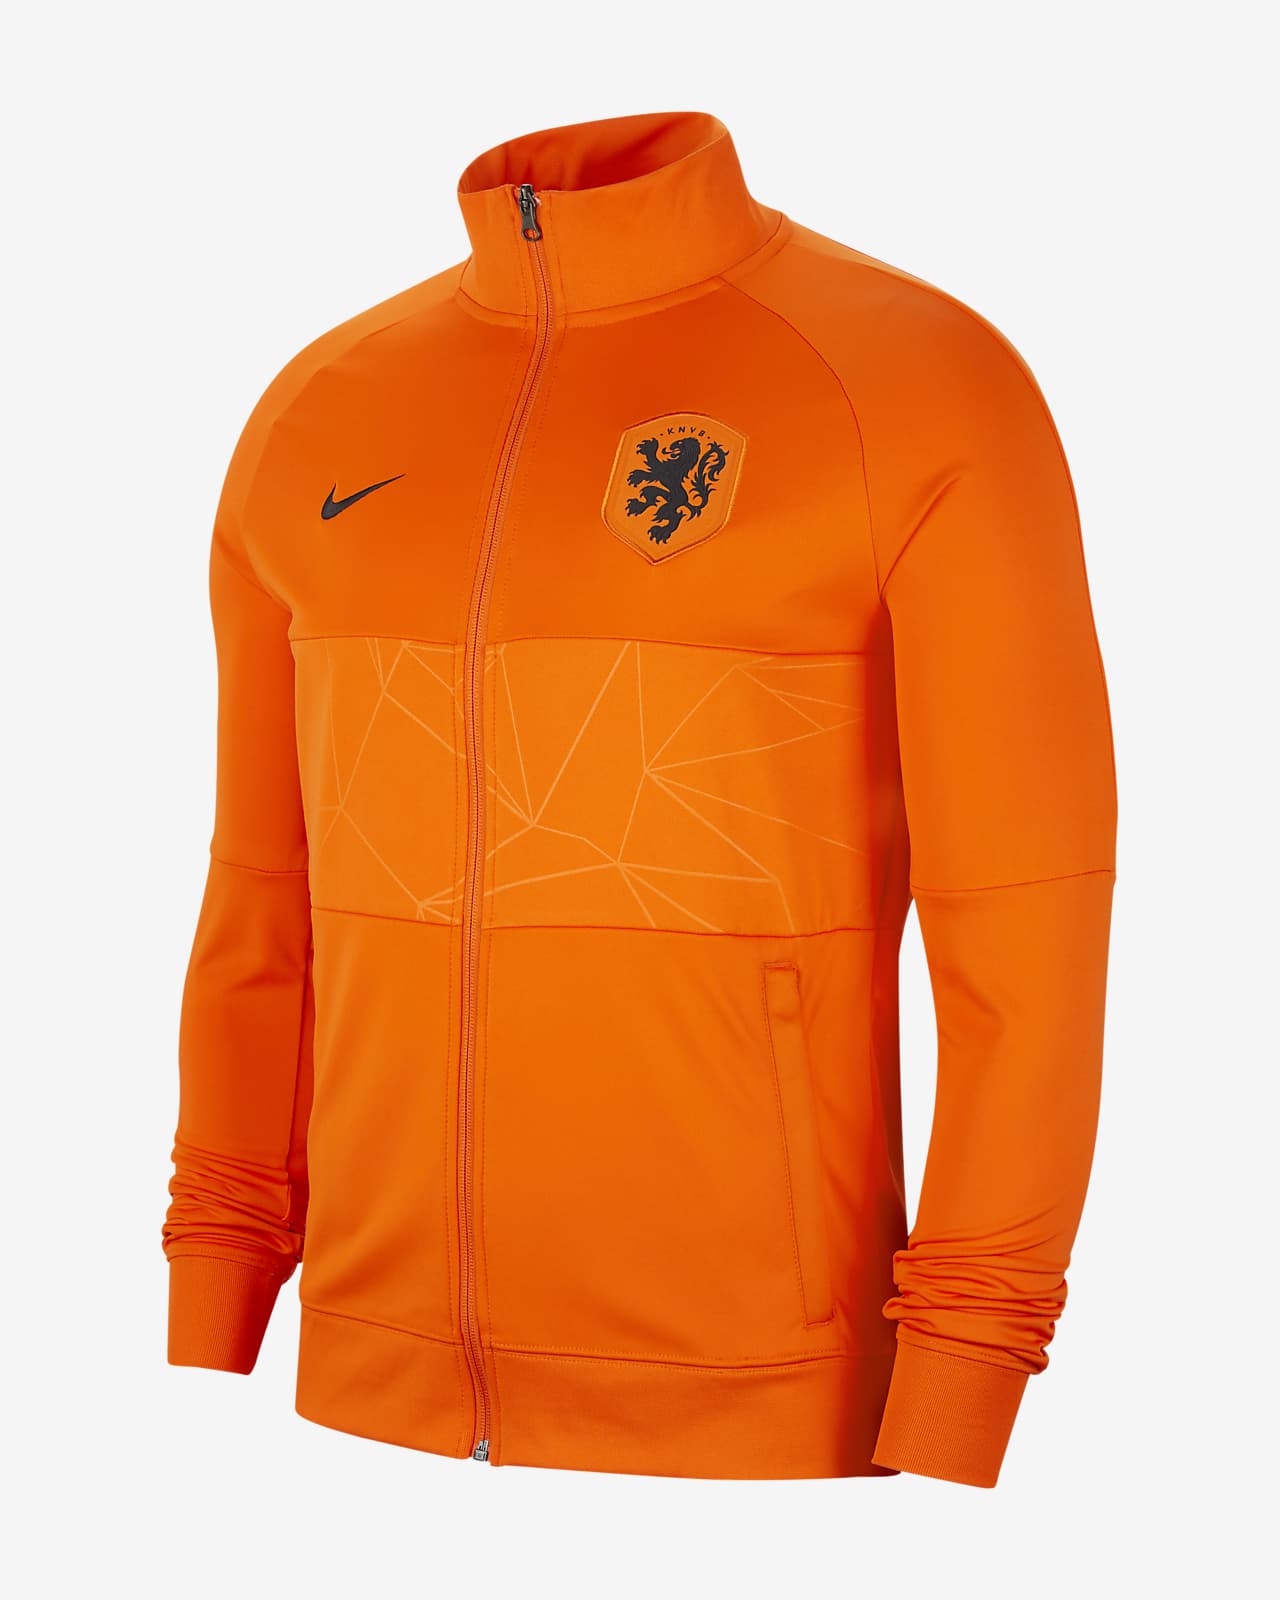 Netherlands Men's Football Jacket